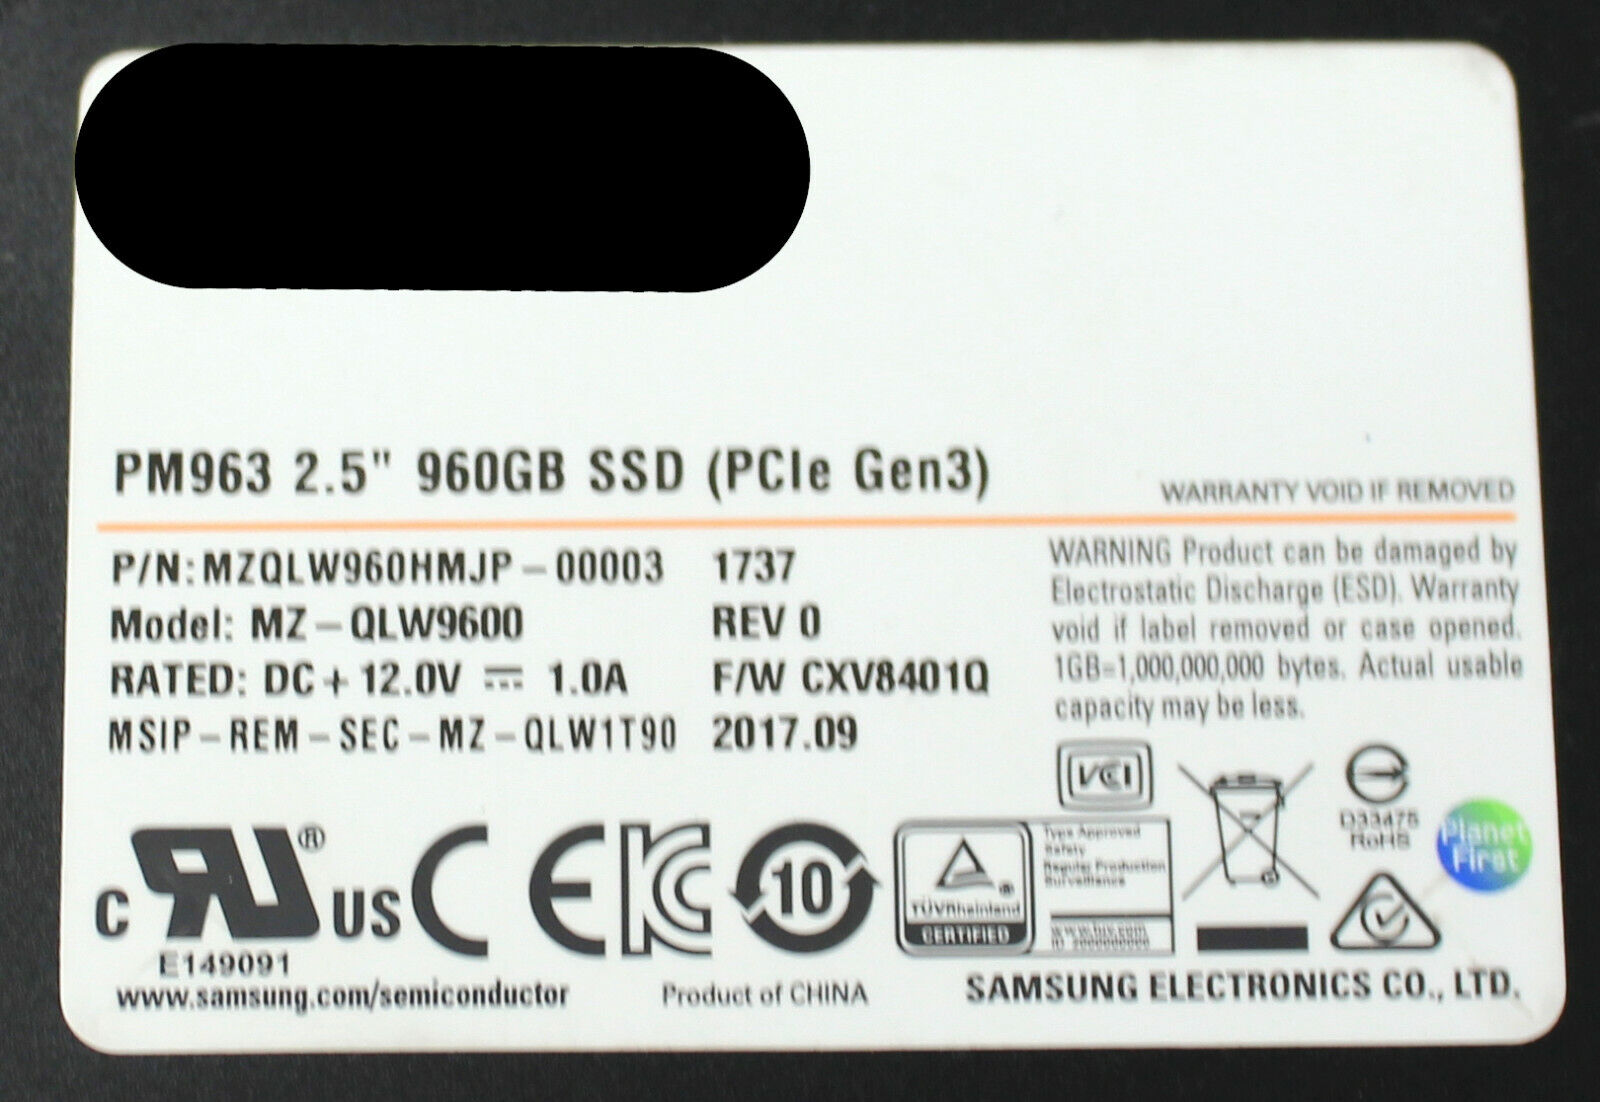 MZ-QLW9600 MZQLW960HMJP-00003 Samsung 960GB PM963 U.2 NVMe PCIe 2.5